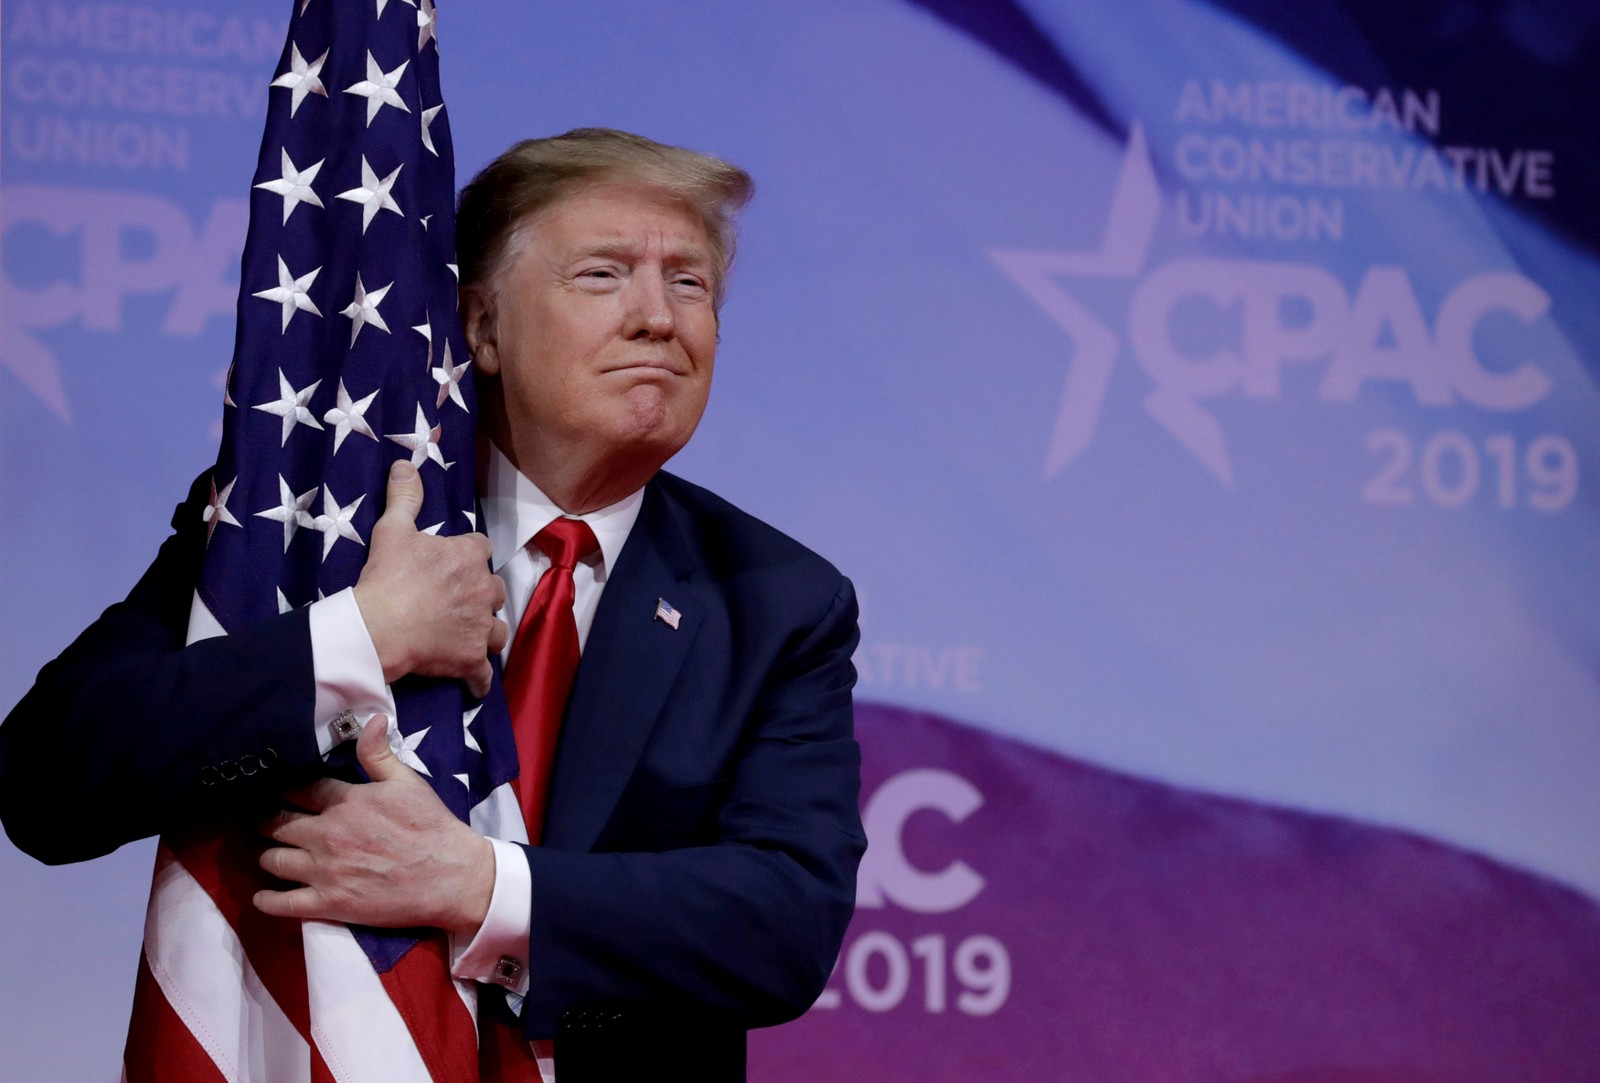 Trump abraça a bandeira americana durante evento conservador Reuters - 02/03/2019